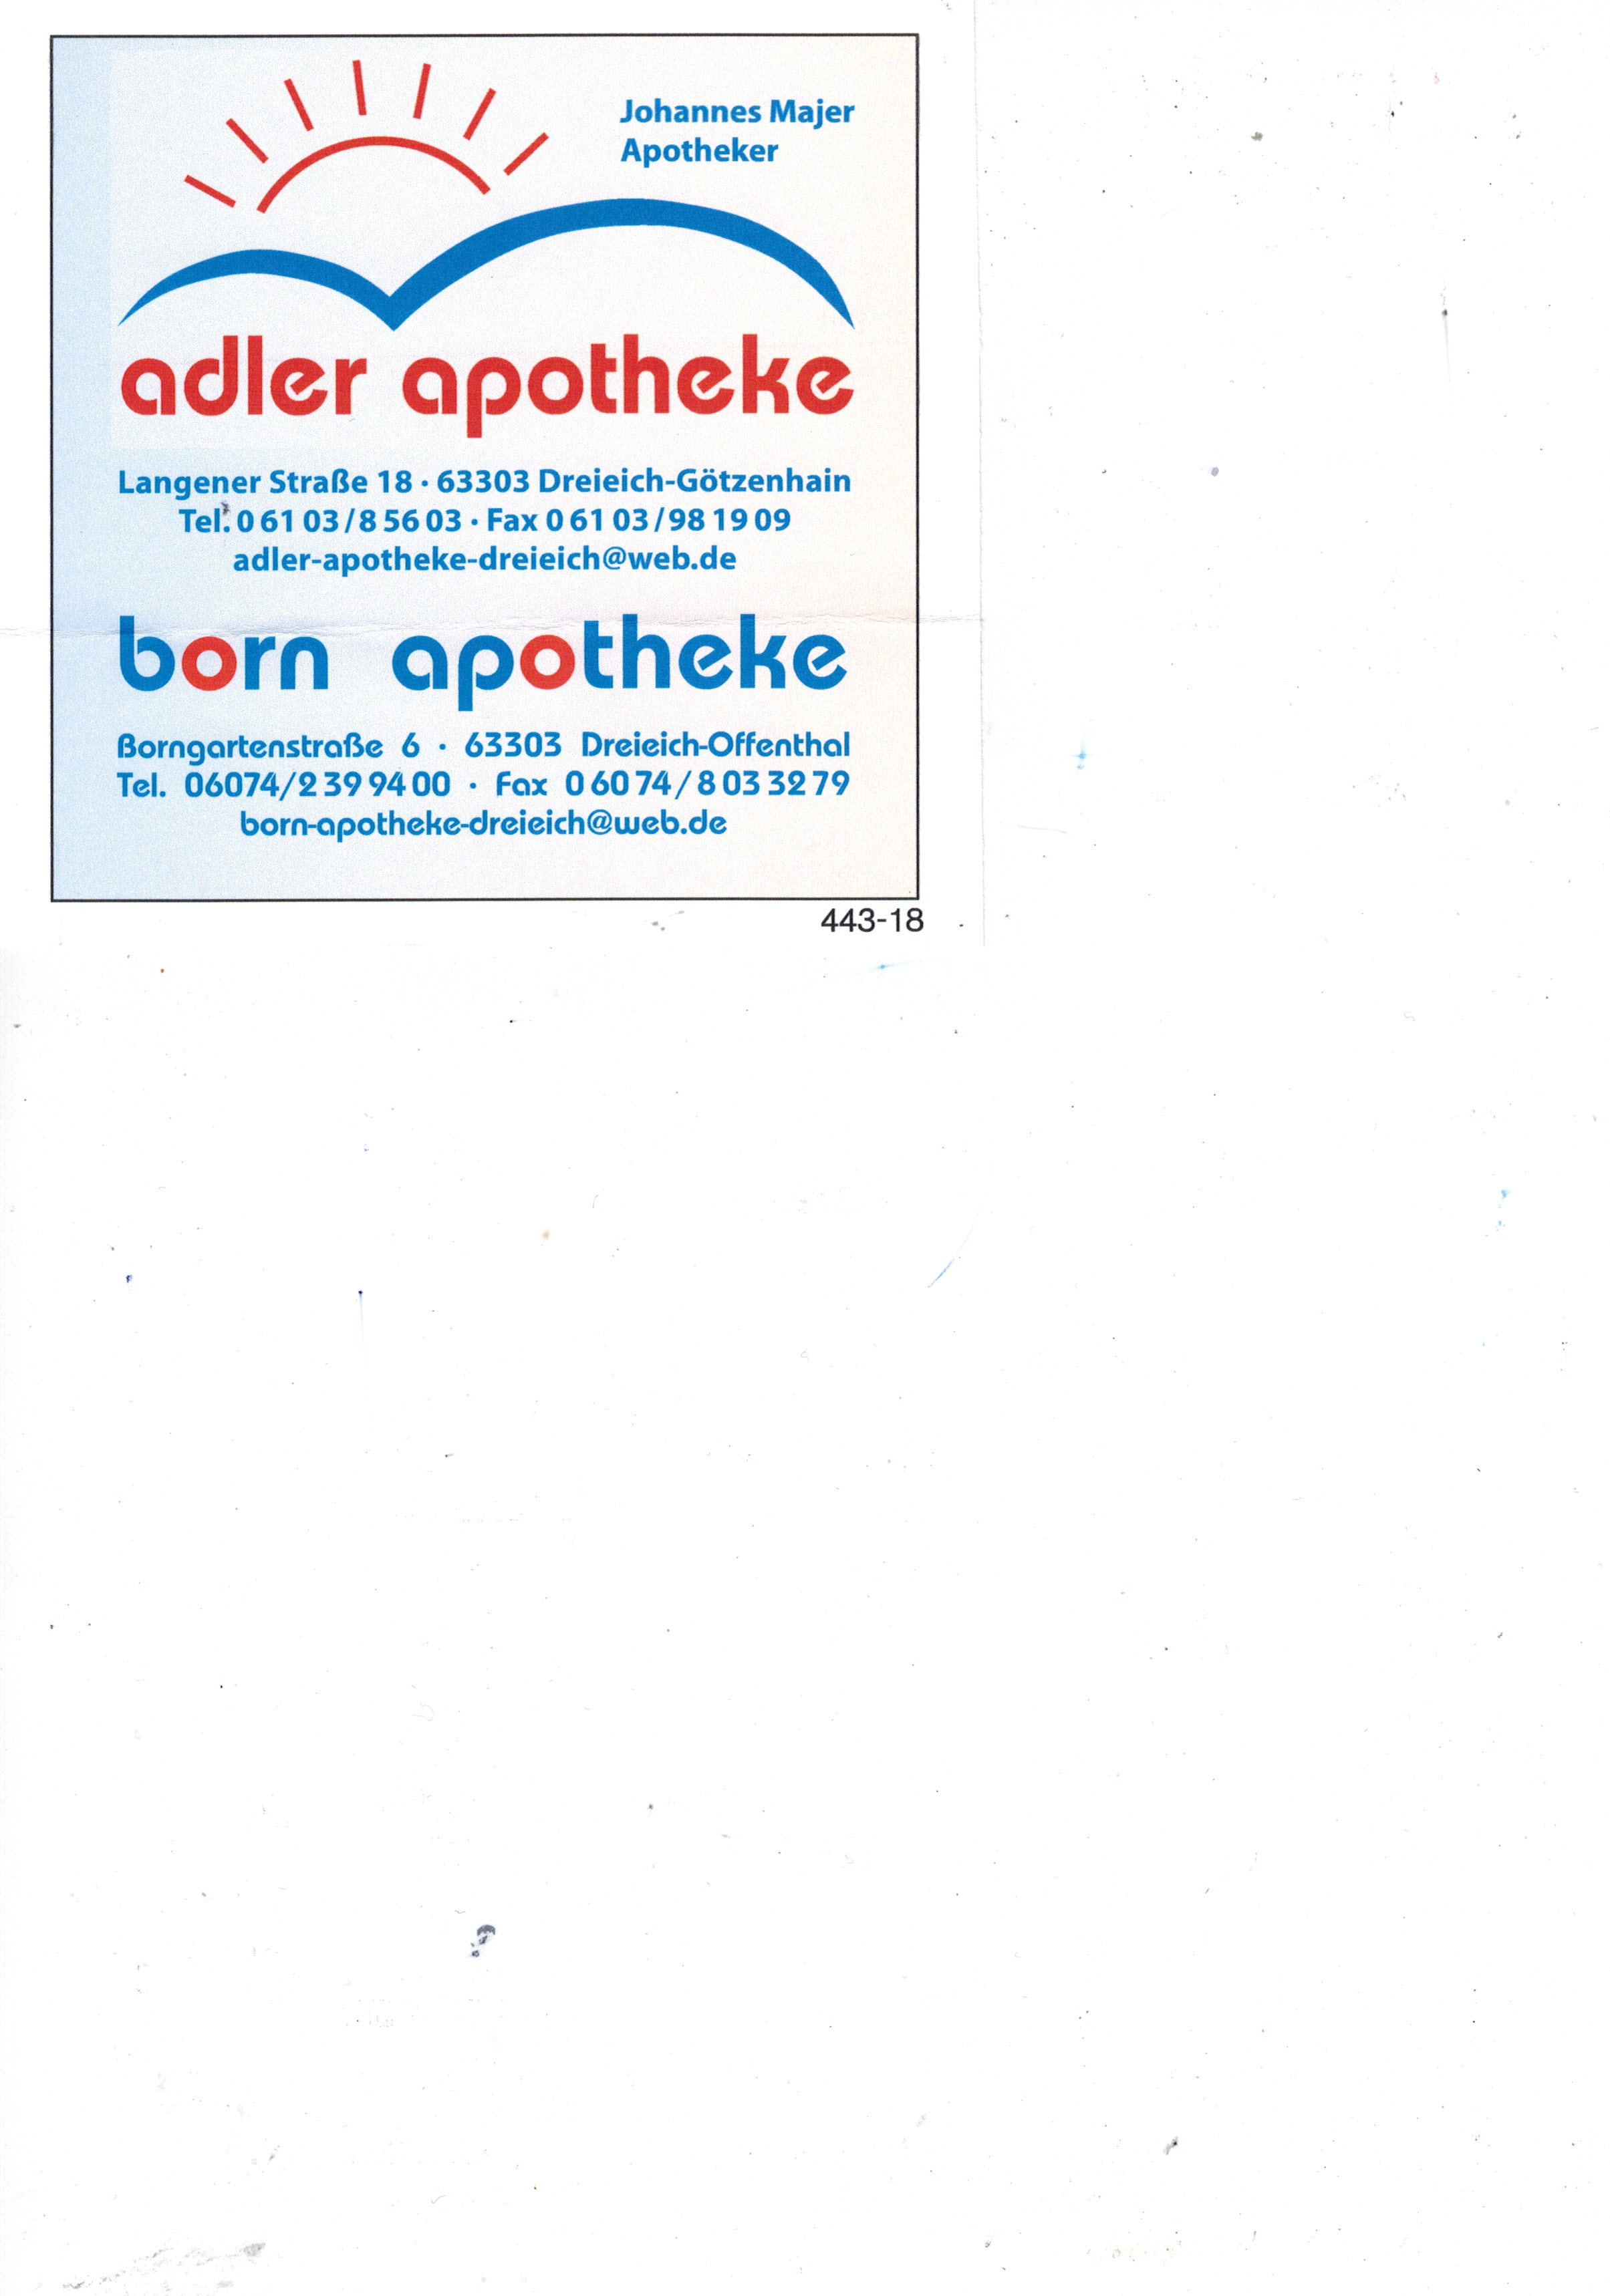 Born-Apotheke